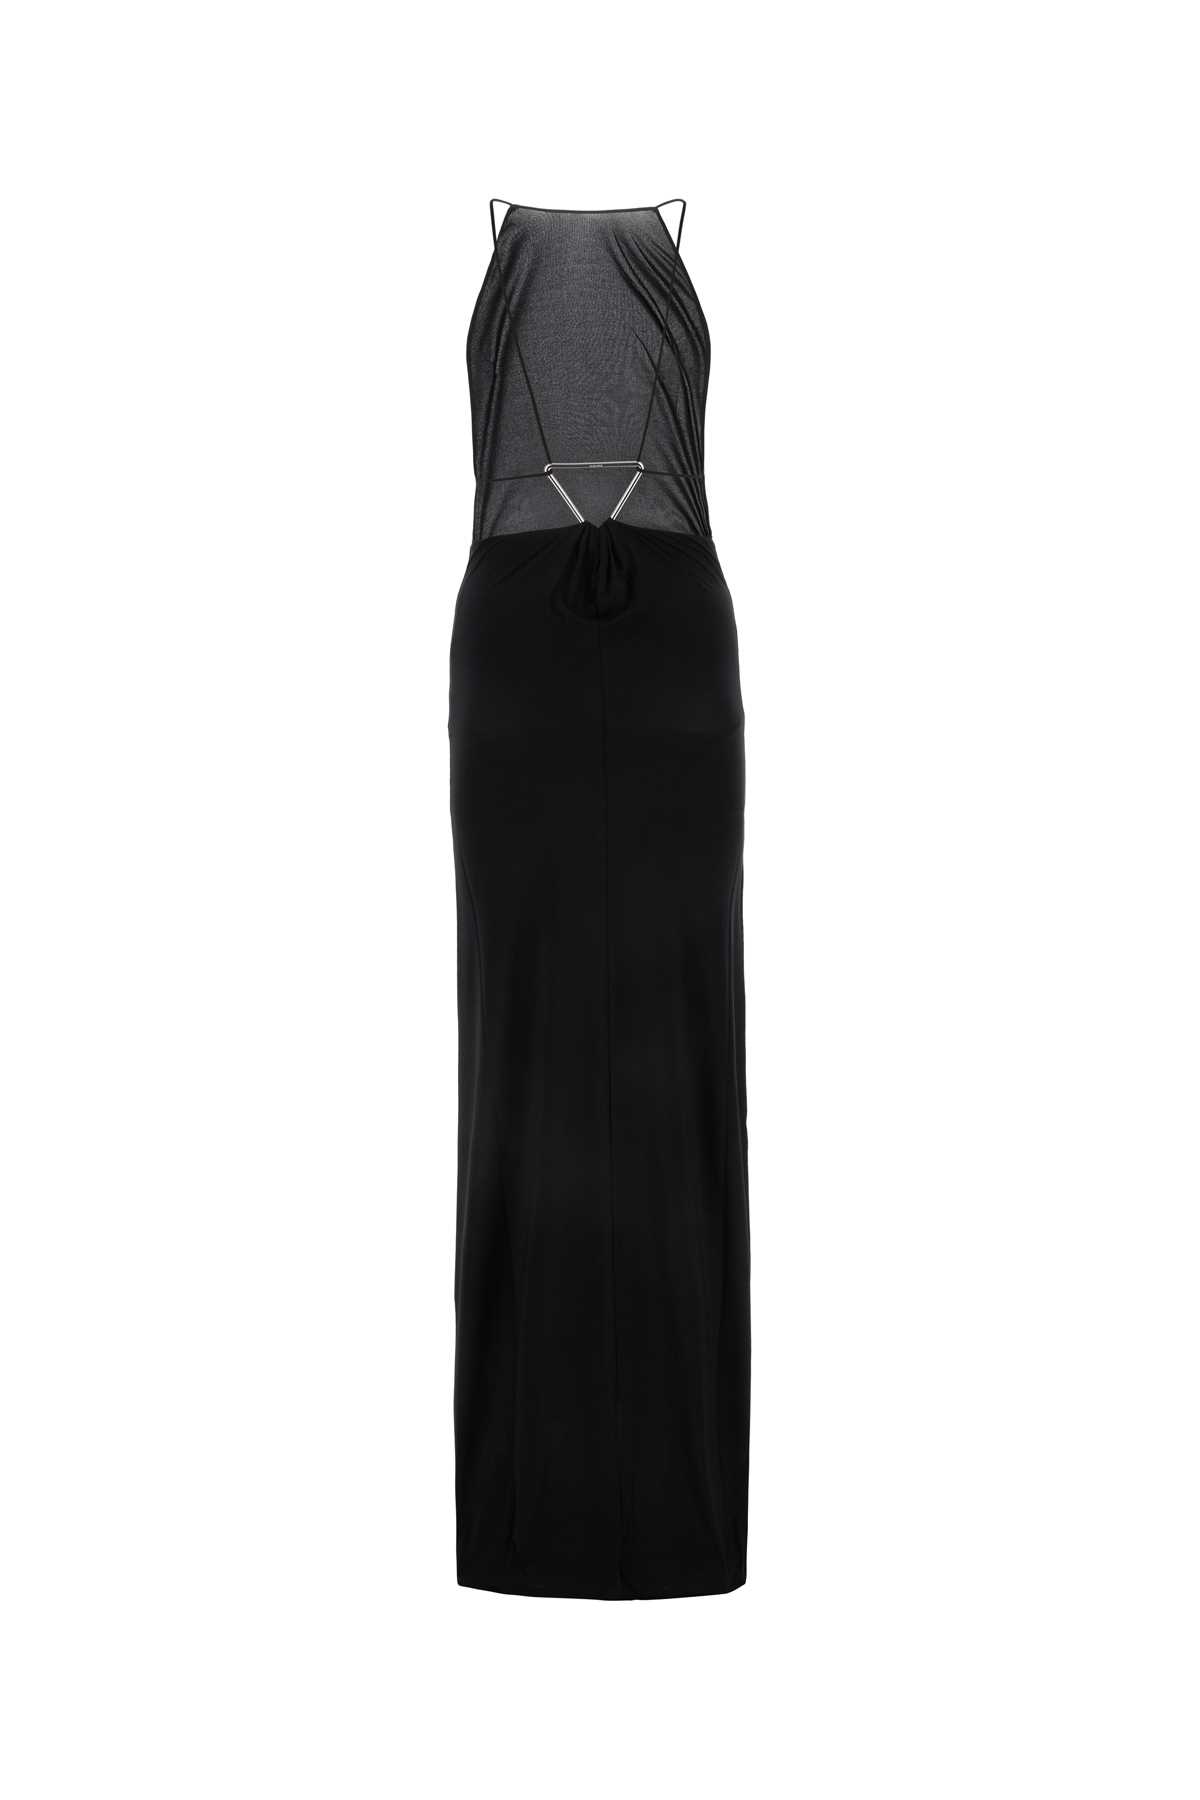 Shop Coperni Black Stretch Nylon Triangle Dress